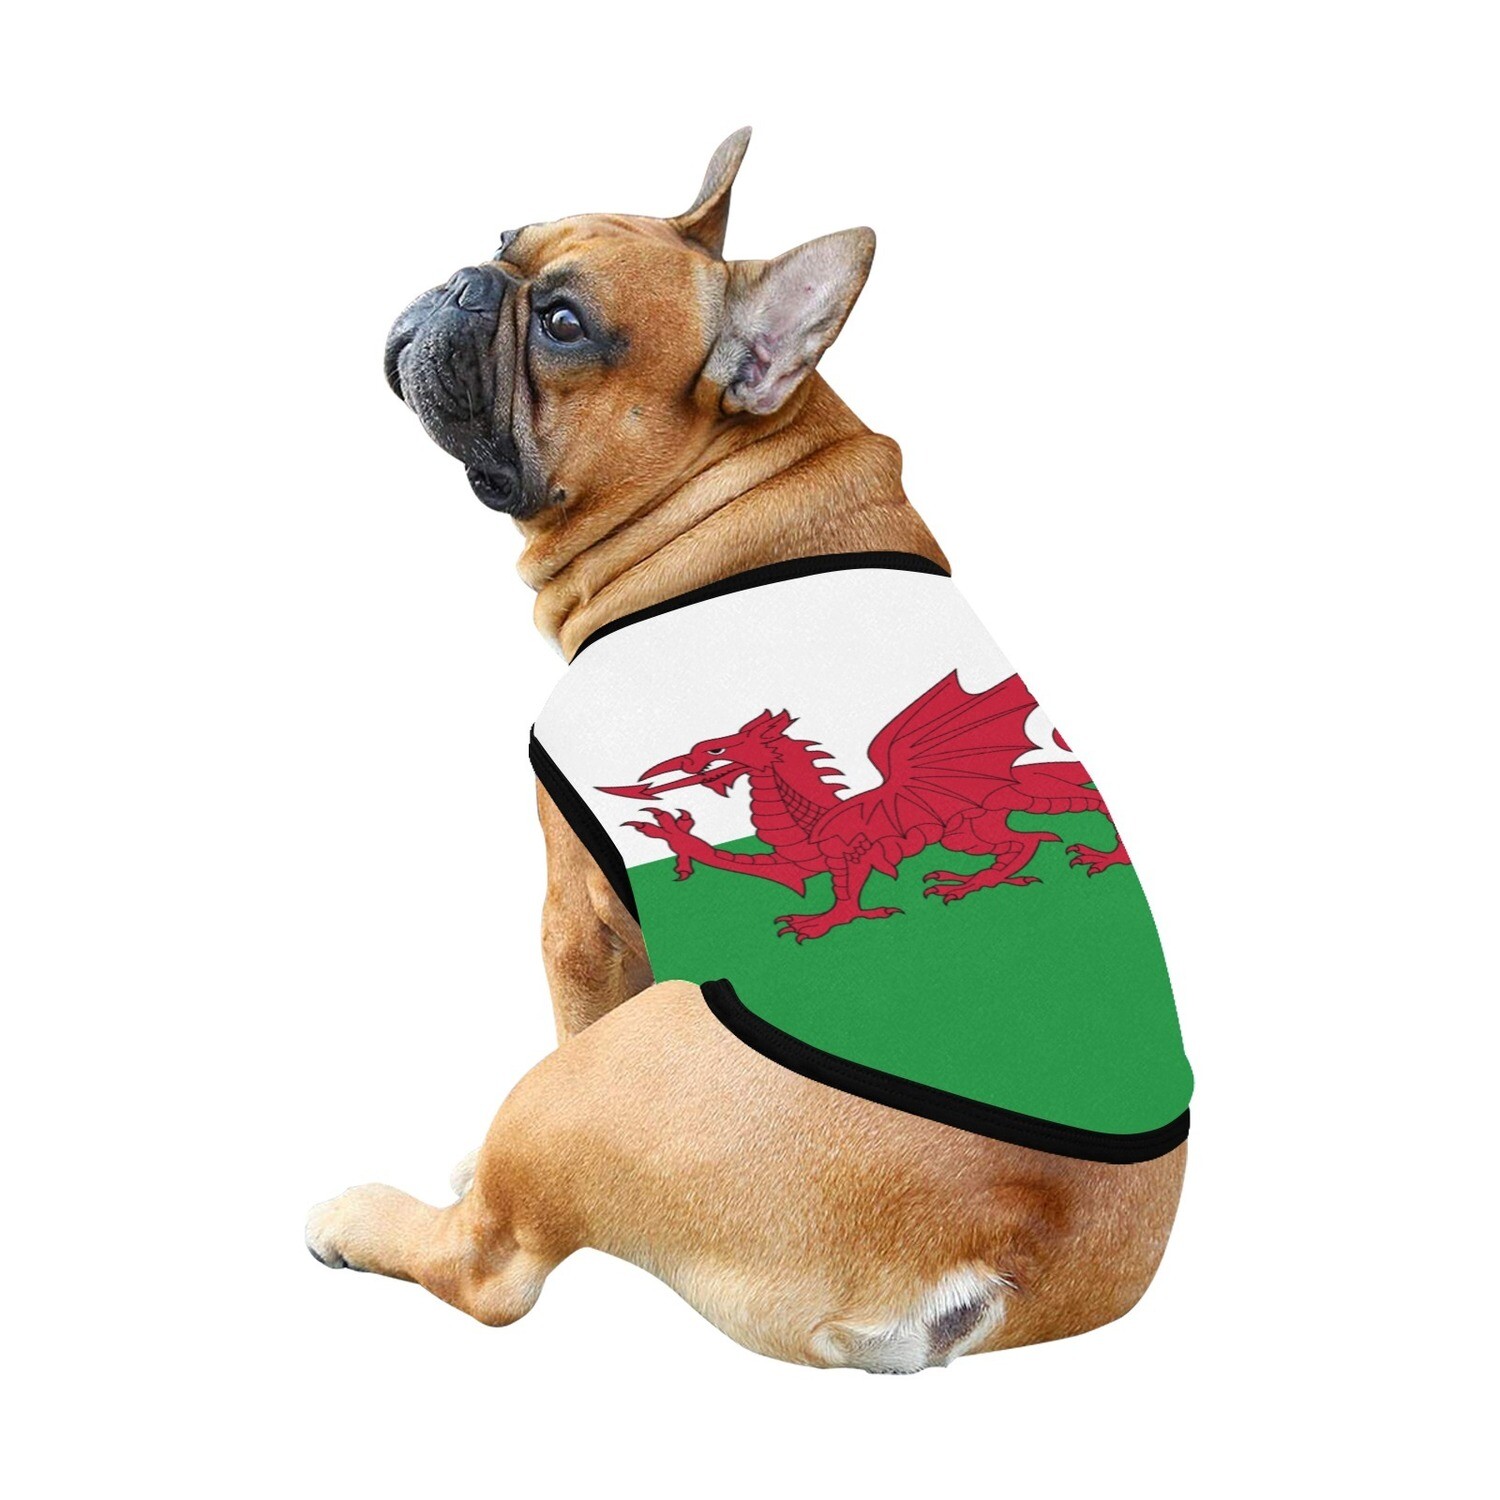 🐕🏴󠁧󠁢󠁷󠁬󠁳󠁿 I love Wales dog t-shirt, dog gift, dog tank top, dog shirt, dog clothes, gift, 7 sizes XS to 3XL, Welsh dragon flag